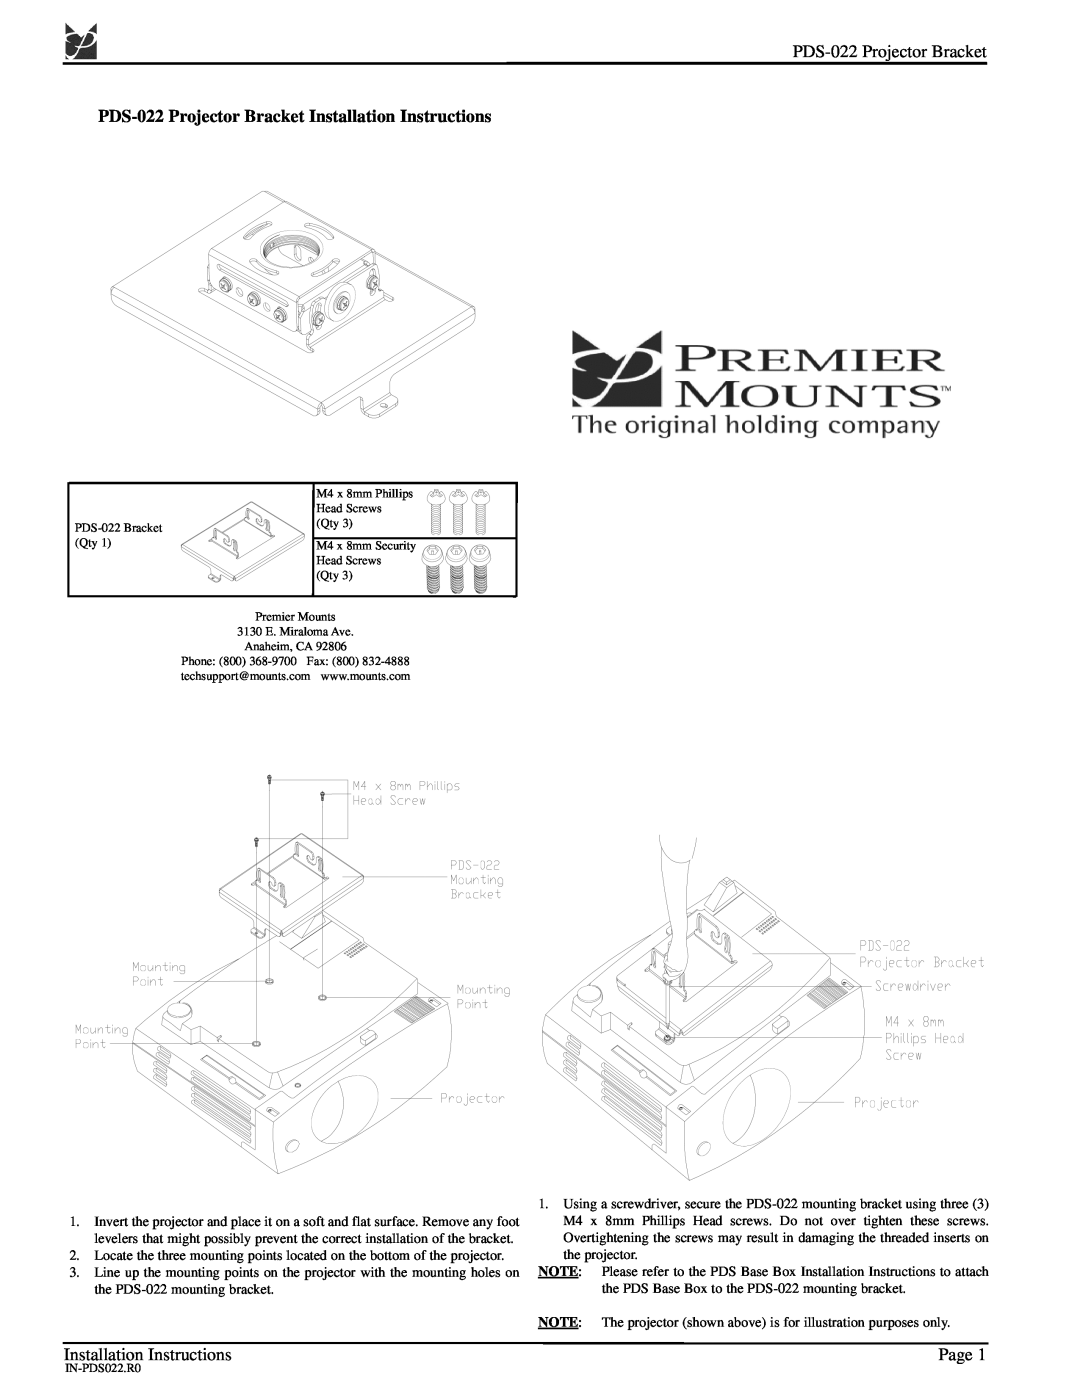 Premier Mounts installation instructions PDS-022Projector Bracket, Installation Instructions, Page 